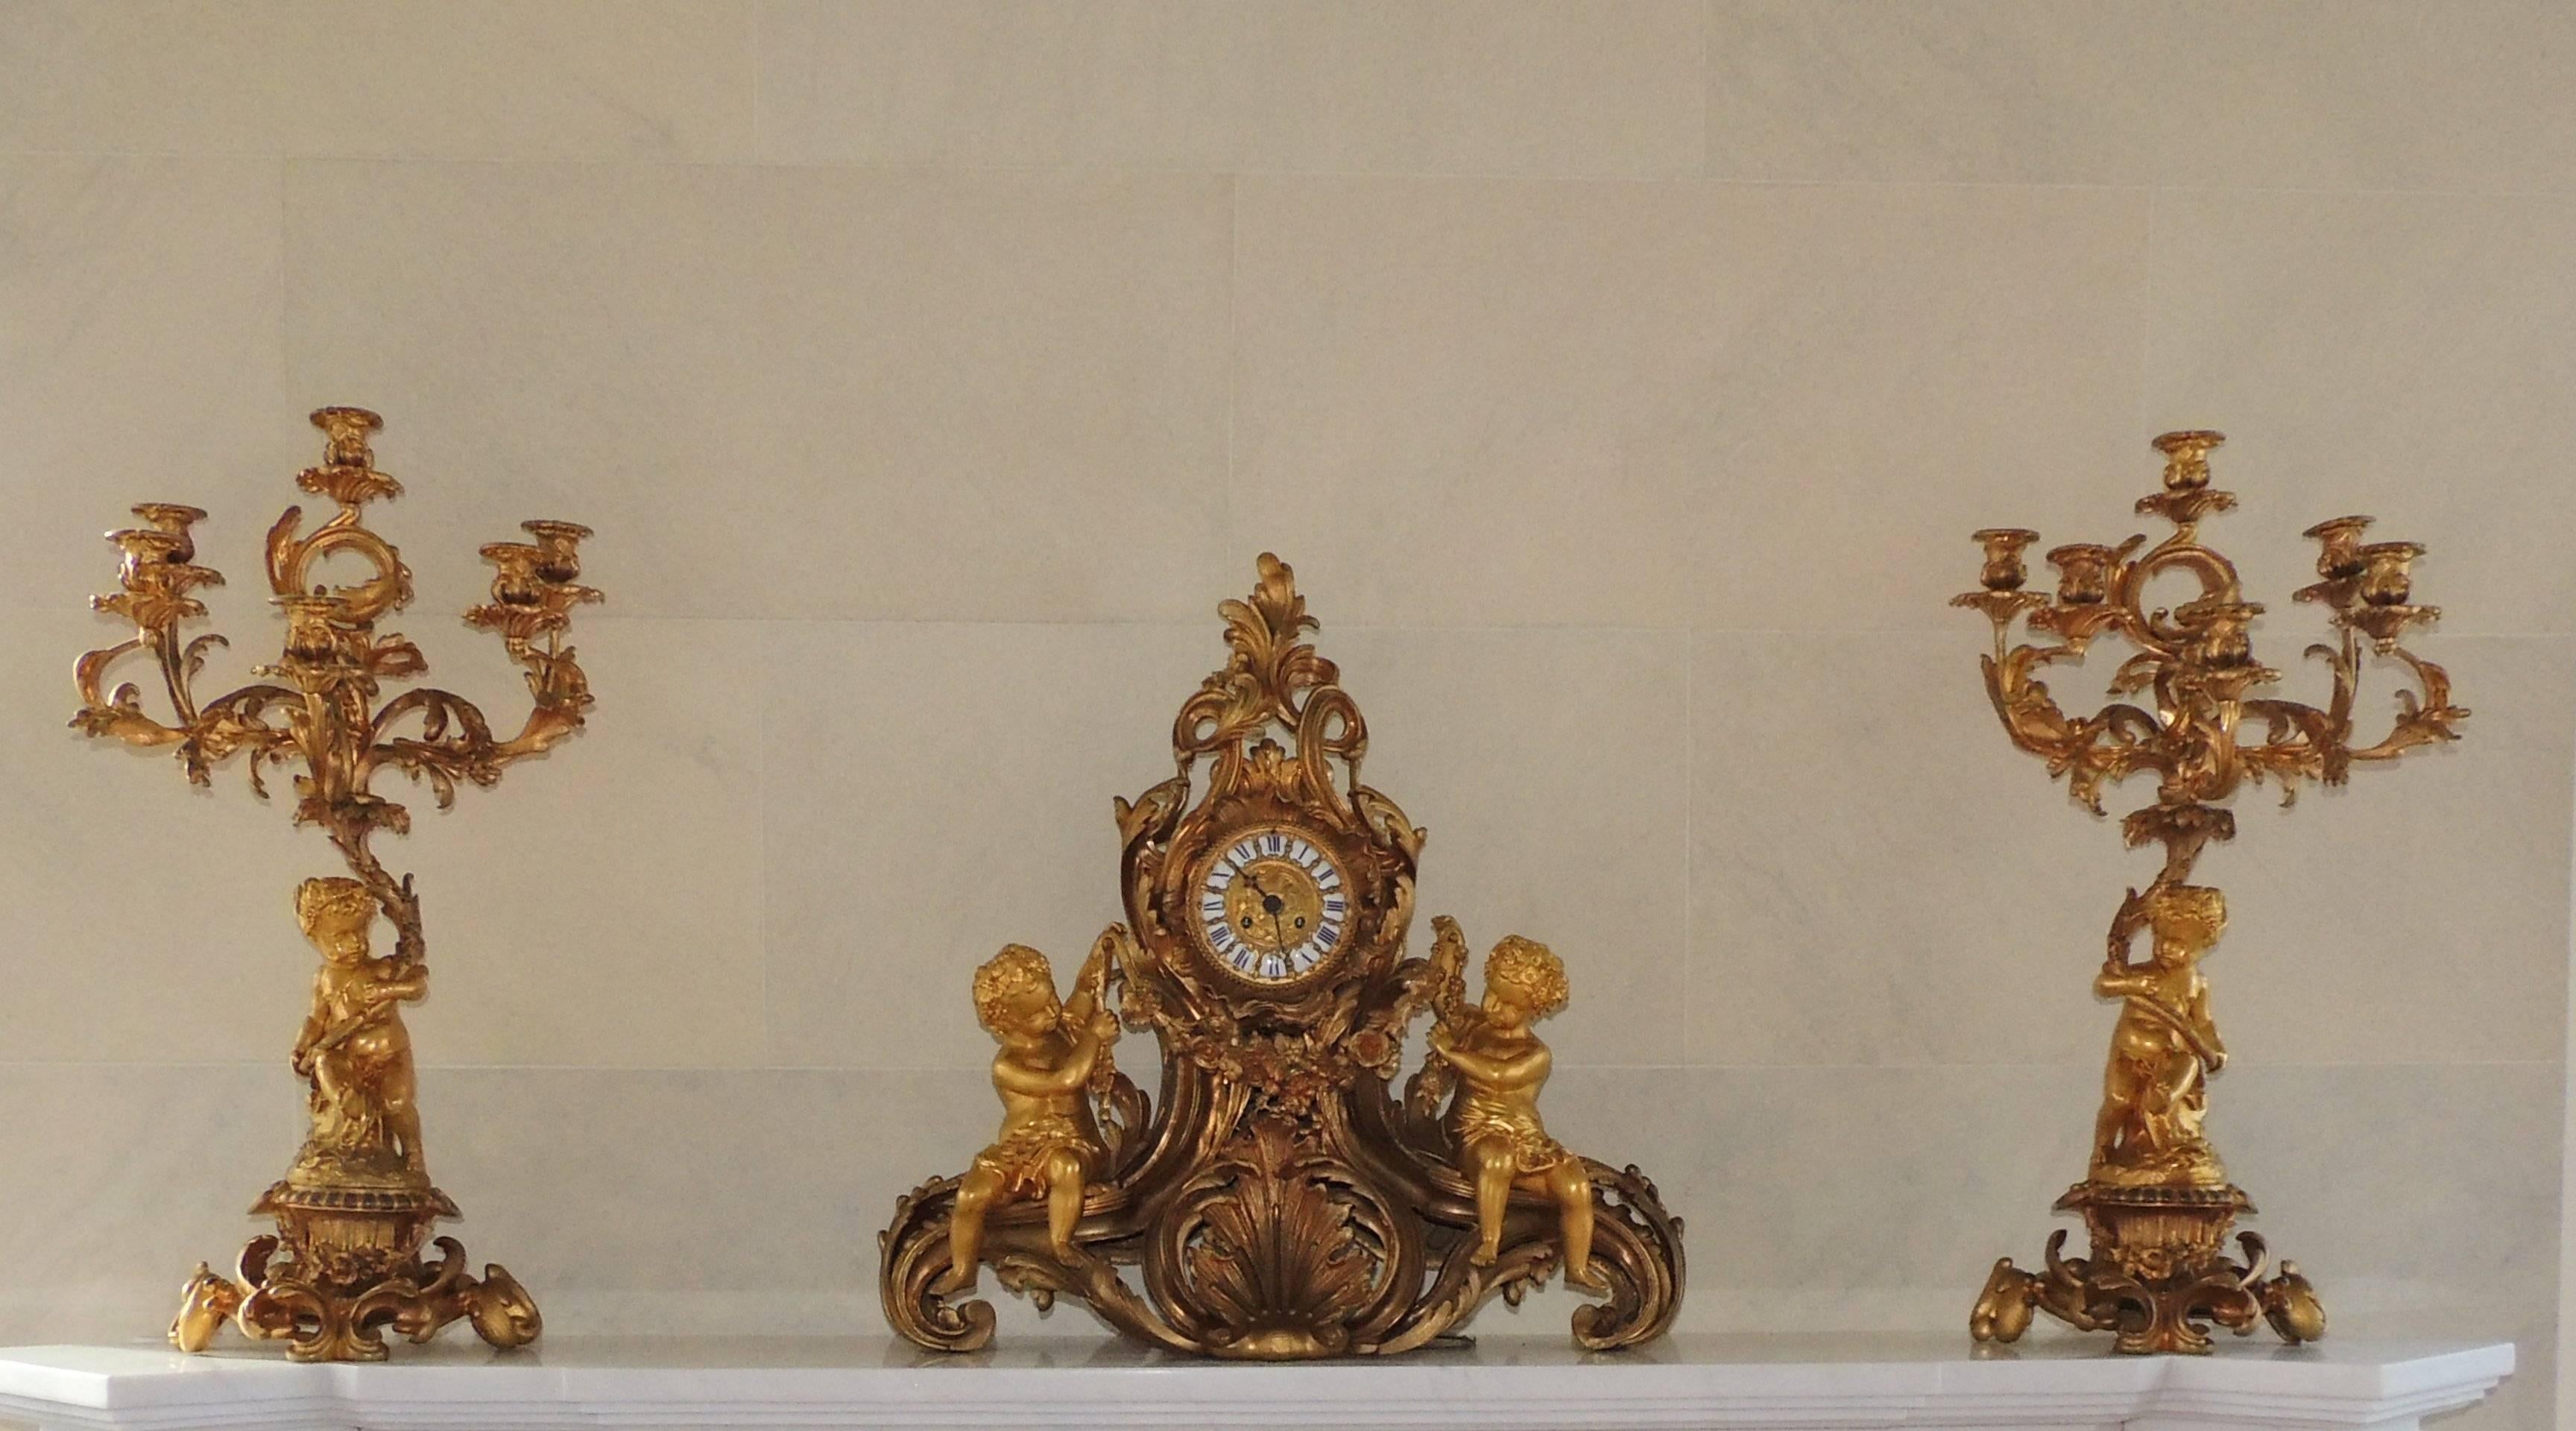 Wonderful large French cherub putti three-piece gilt doré bronze rococo clock set with five-arm candelabras.

Measures: 

Clocks: 26" W x 25" H x 10" D.

Candelabra: 29" H x 15" W x 13" D.